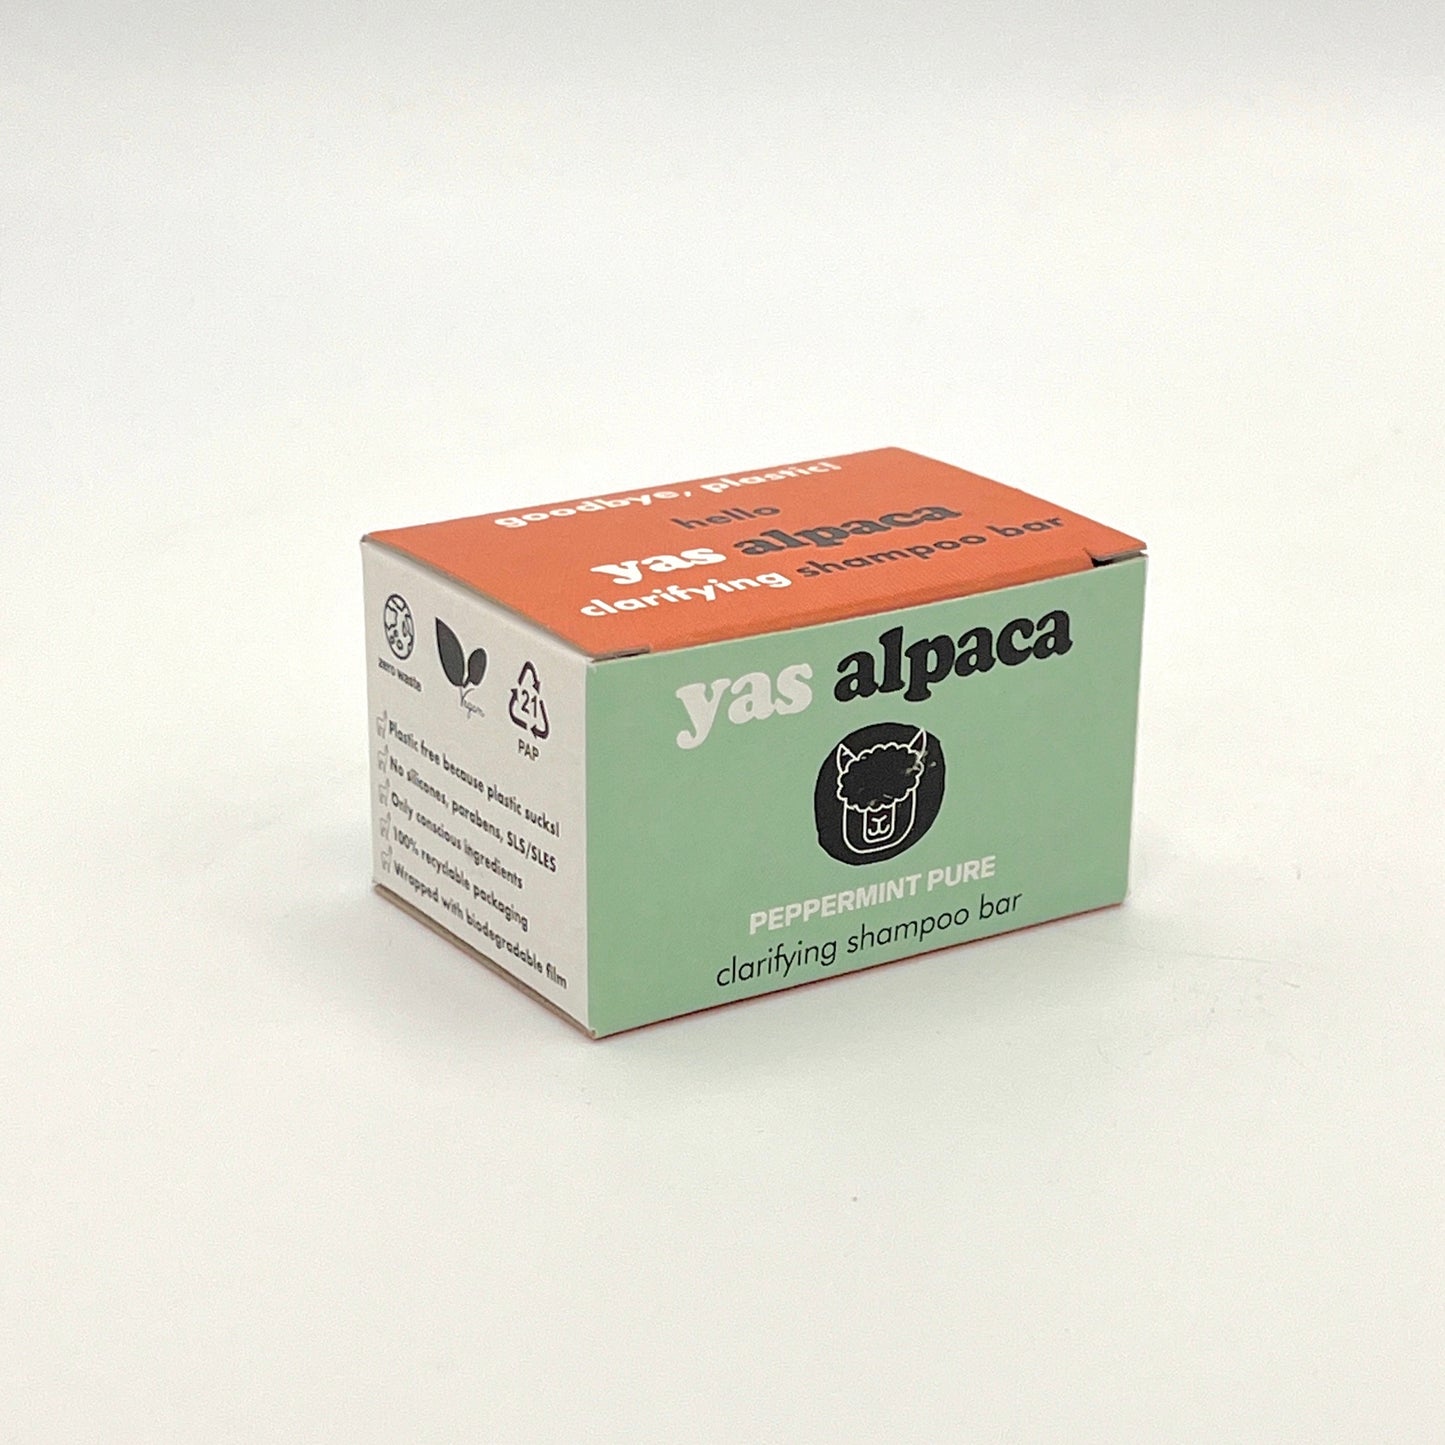 Shampoo von Yas Alpaca- Peppermint Pure